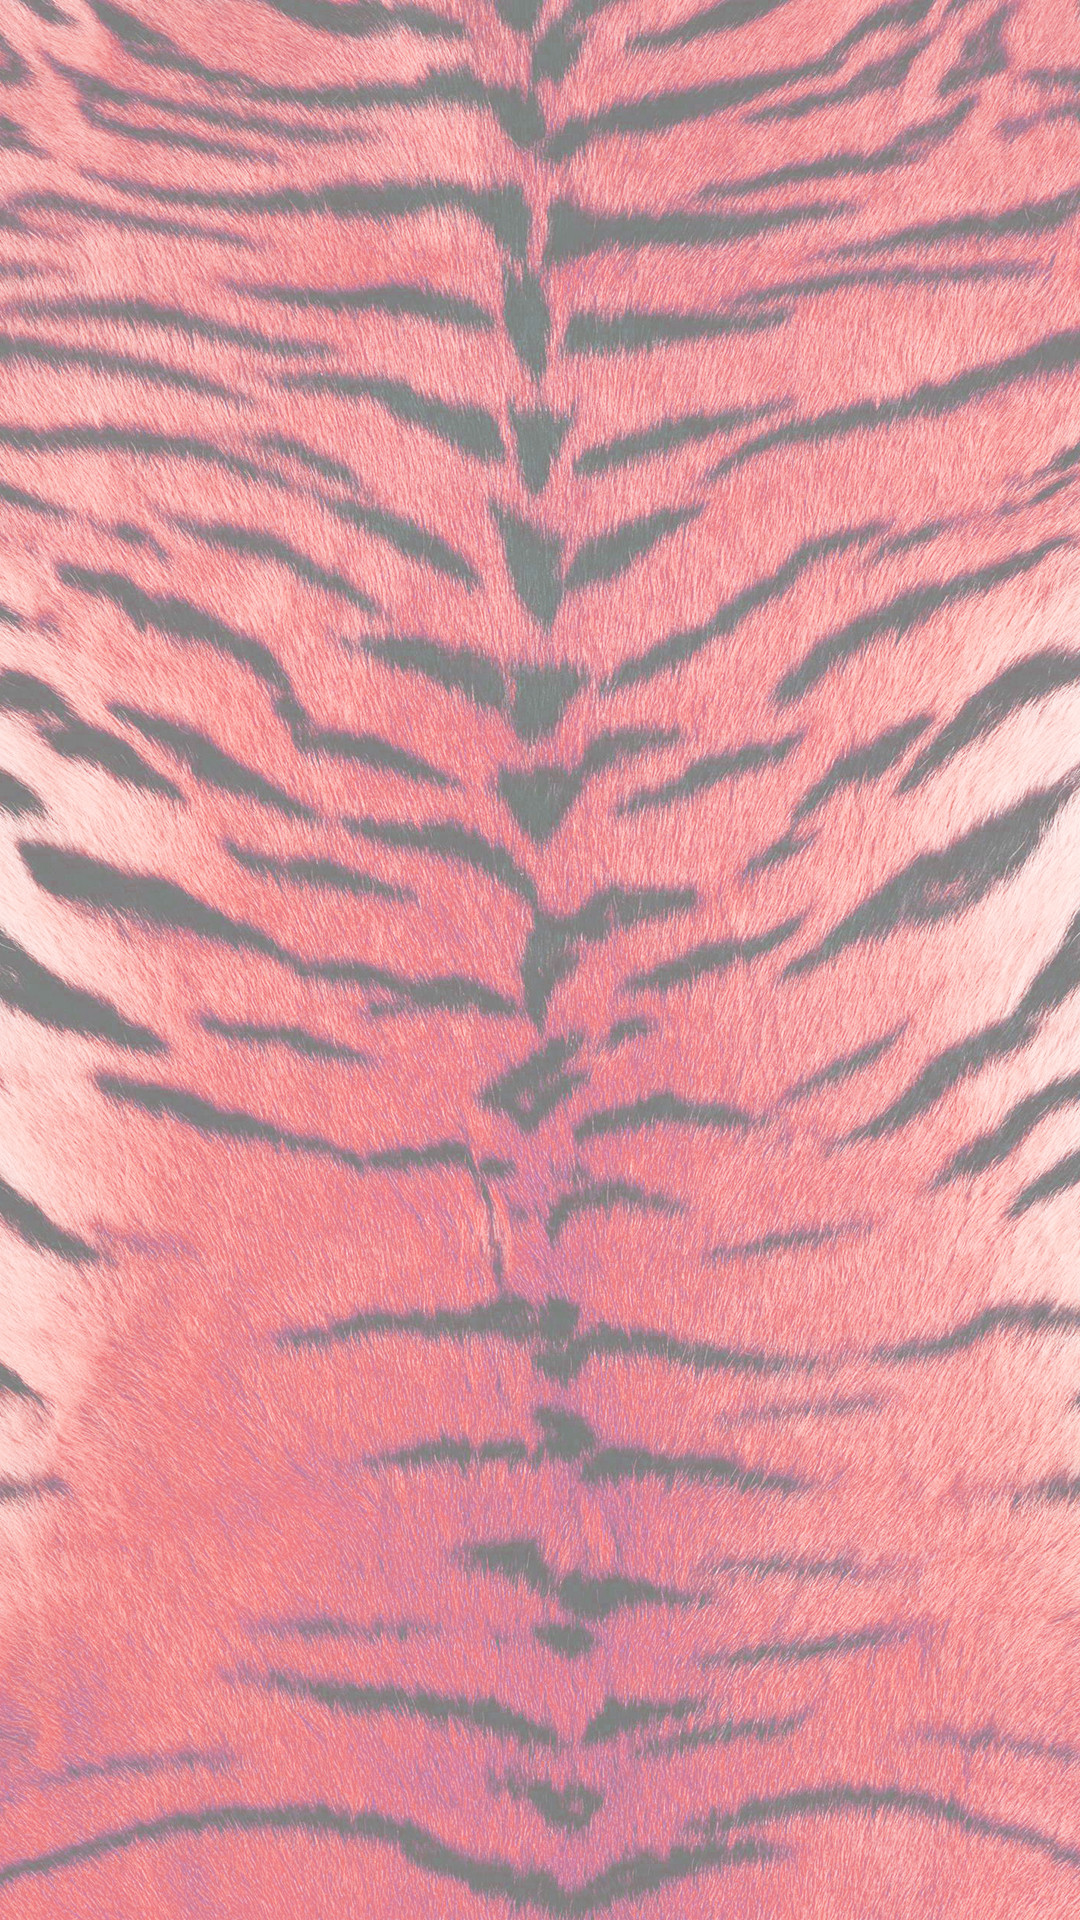 Fur pattern tiger Red iPhone7 Plus Wallpaper